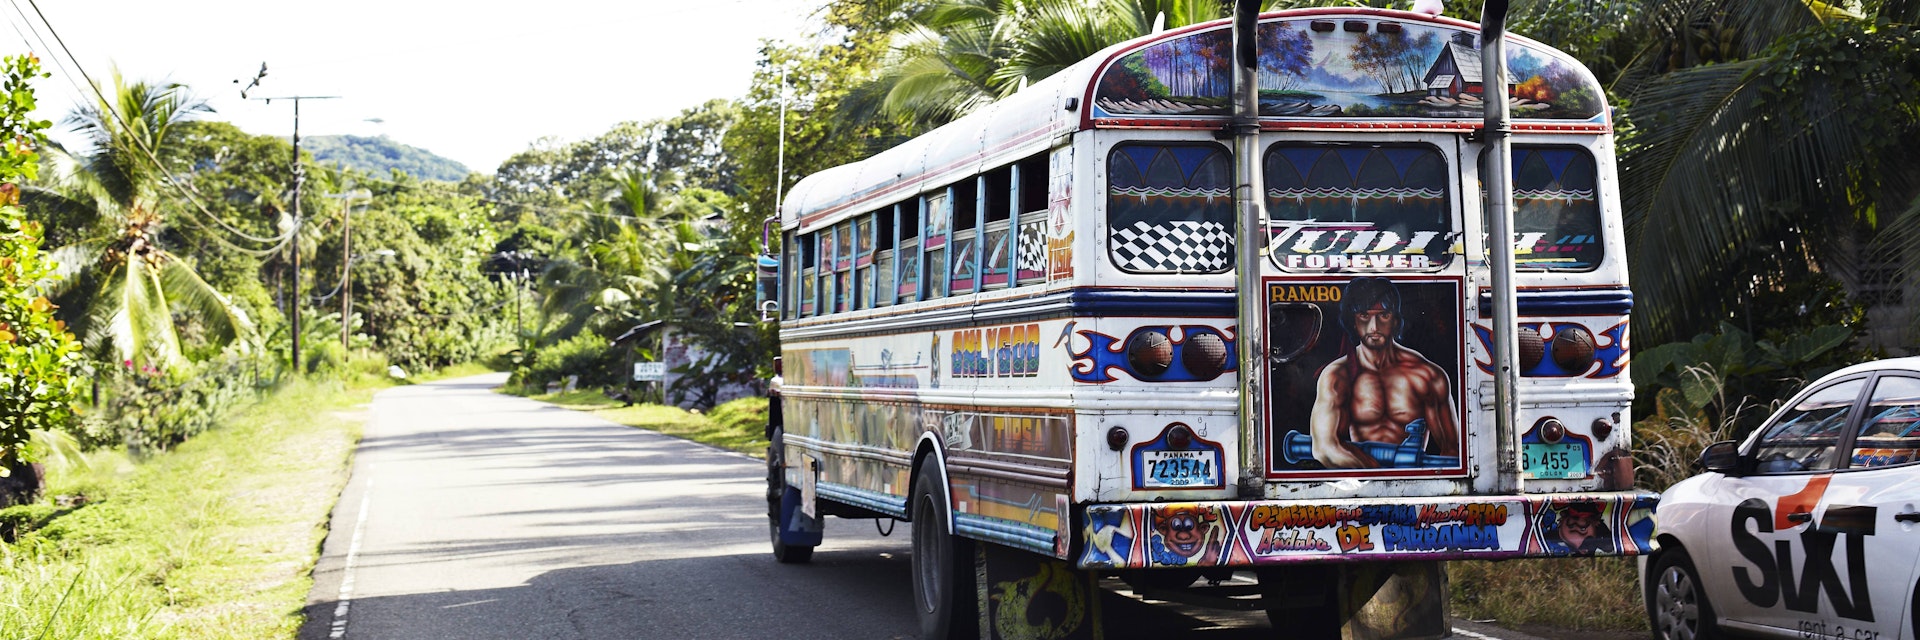 Painted public bus on road around Portobelo.